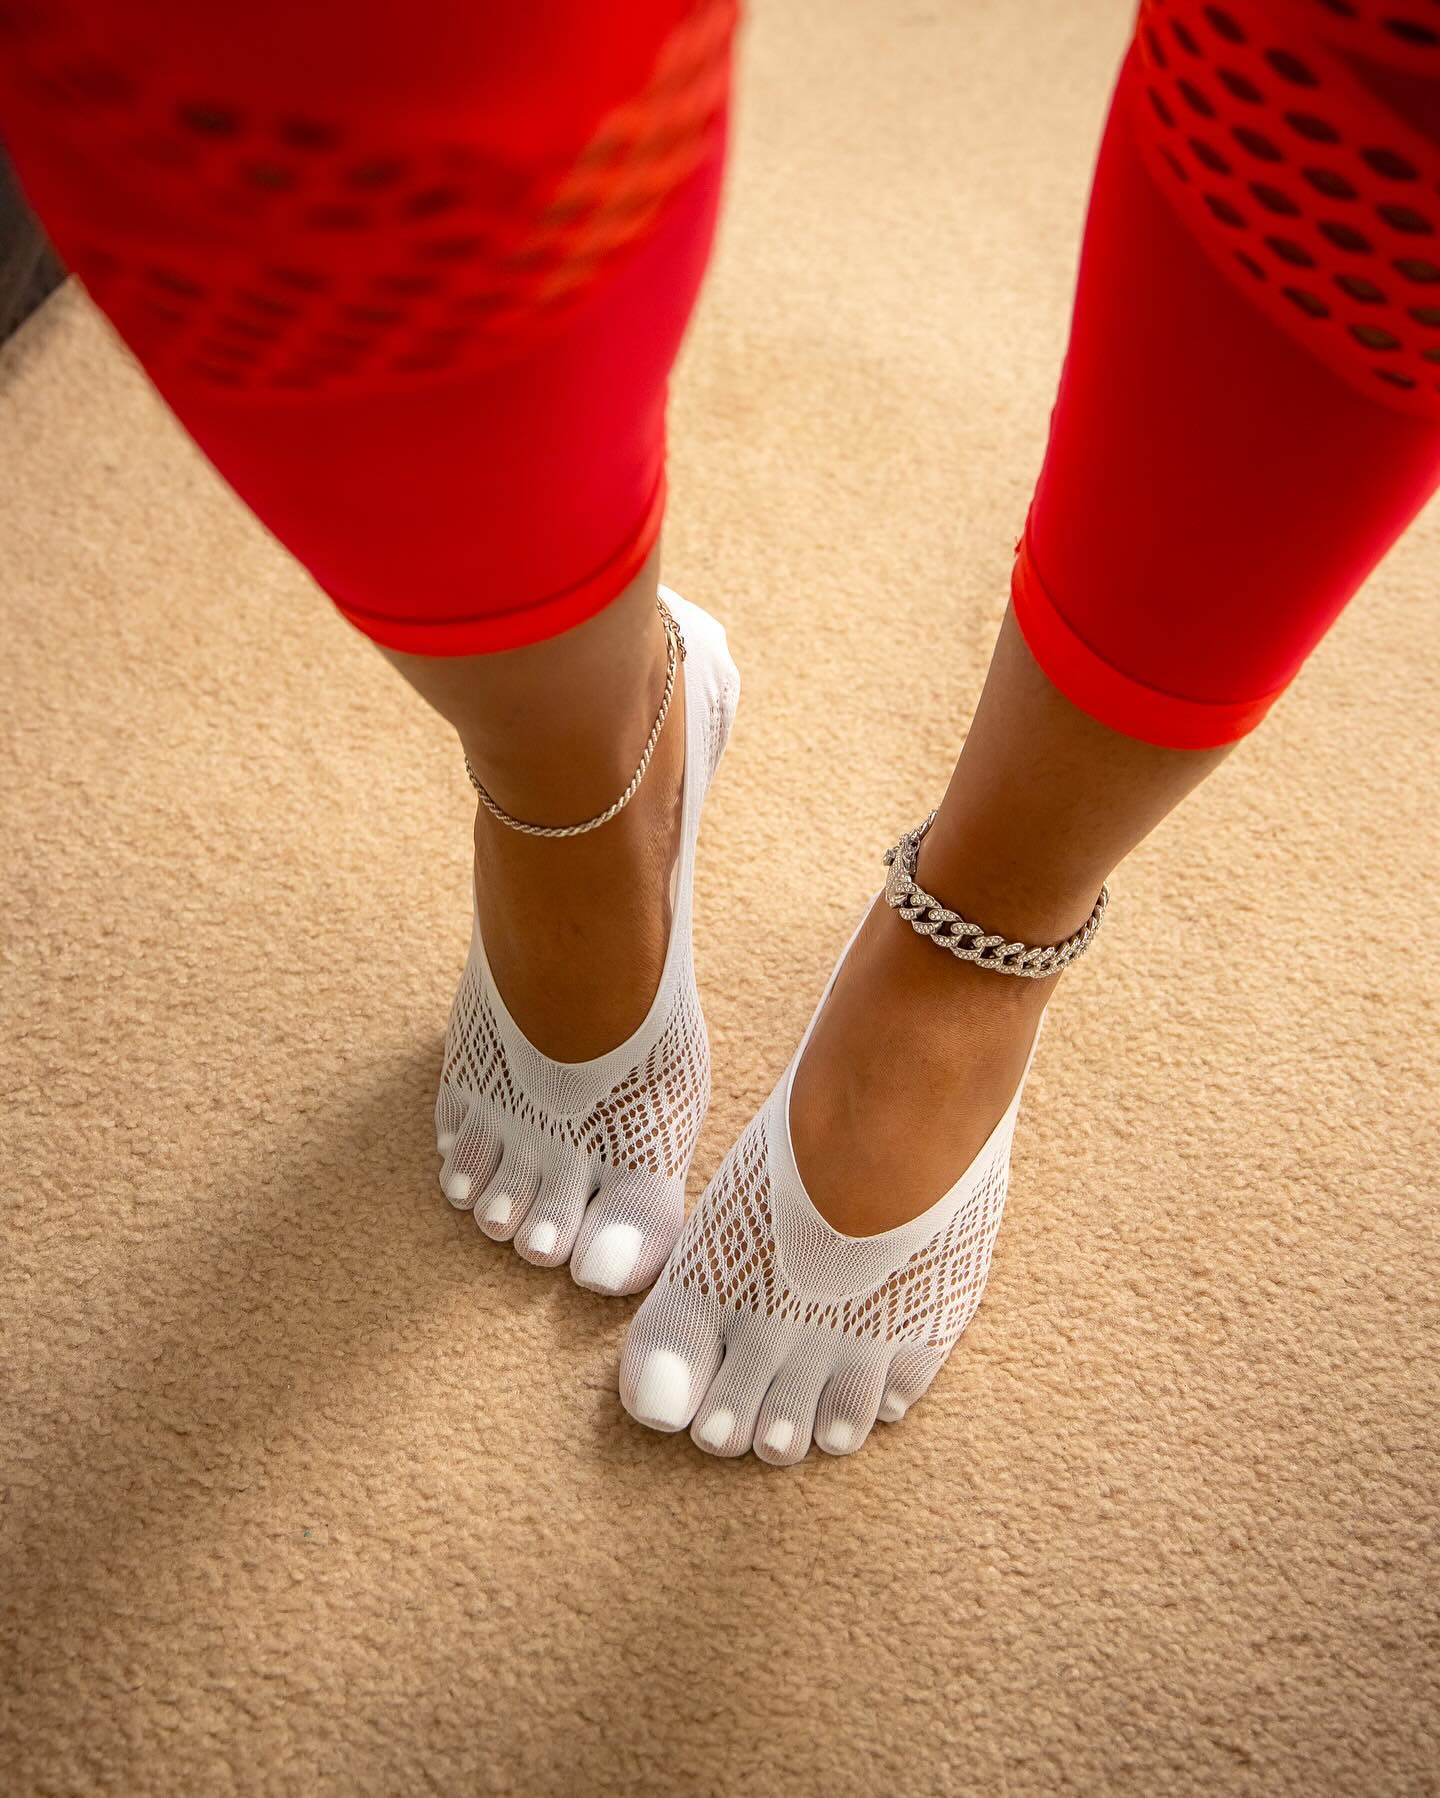 Slippers? Sock? Or Toe socks?! 🤍•
•
•
•
#sassytoes #pedicure #feetography #prettytoes #feetart #perfecttoes #perfectsoles #prettyfeetgang #toenails #pedicuredtoes #toenaildesigns #smartpedicure #nailsofinstagram #nailaddict #nailpolish #nailpages #beautifulnails #explore #explorepage #nailcolors #whitenails #whitetoes #whitetoenails #whitepolish #whitenailsdesign #whitepedicure #whitetoenails #whitenailpolish #nailcolorsonbrownskin #TeamWolfieWhite #wolfpack